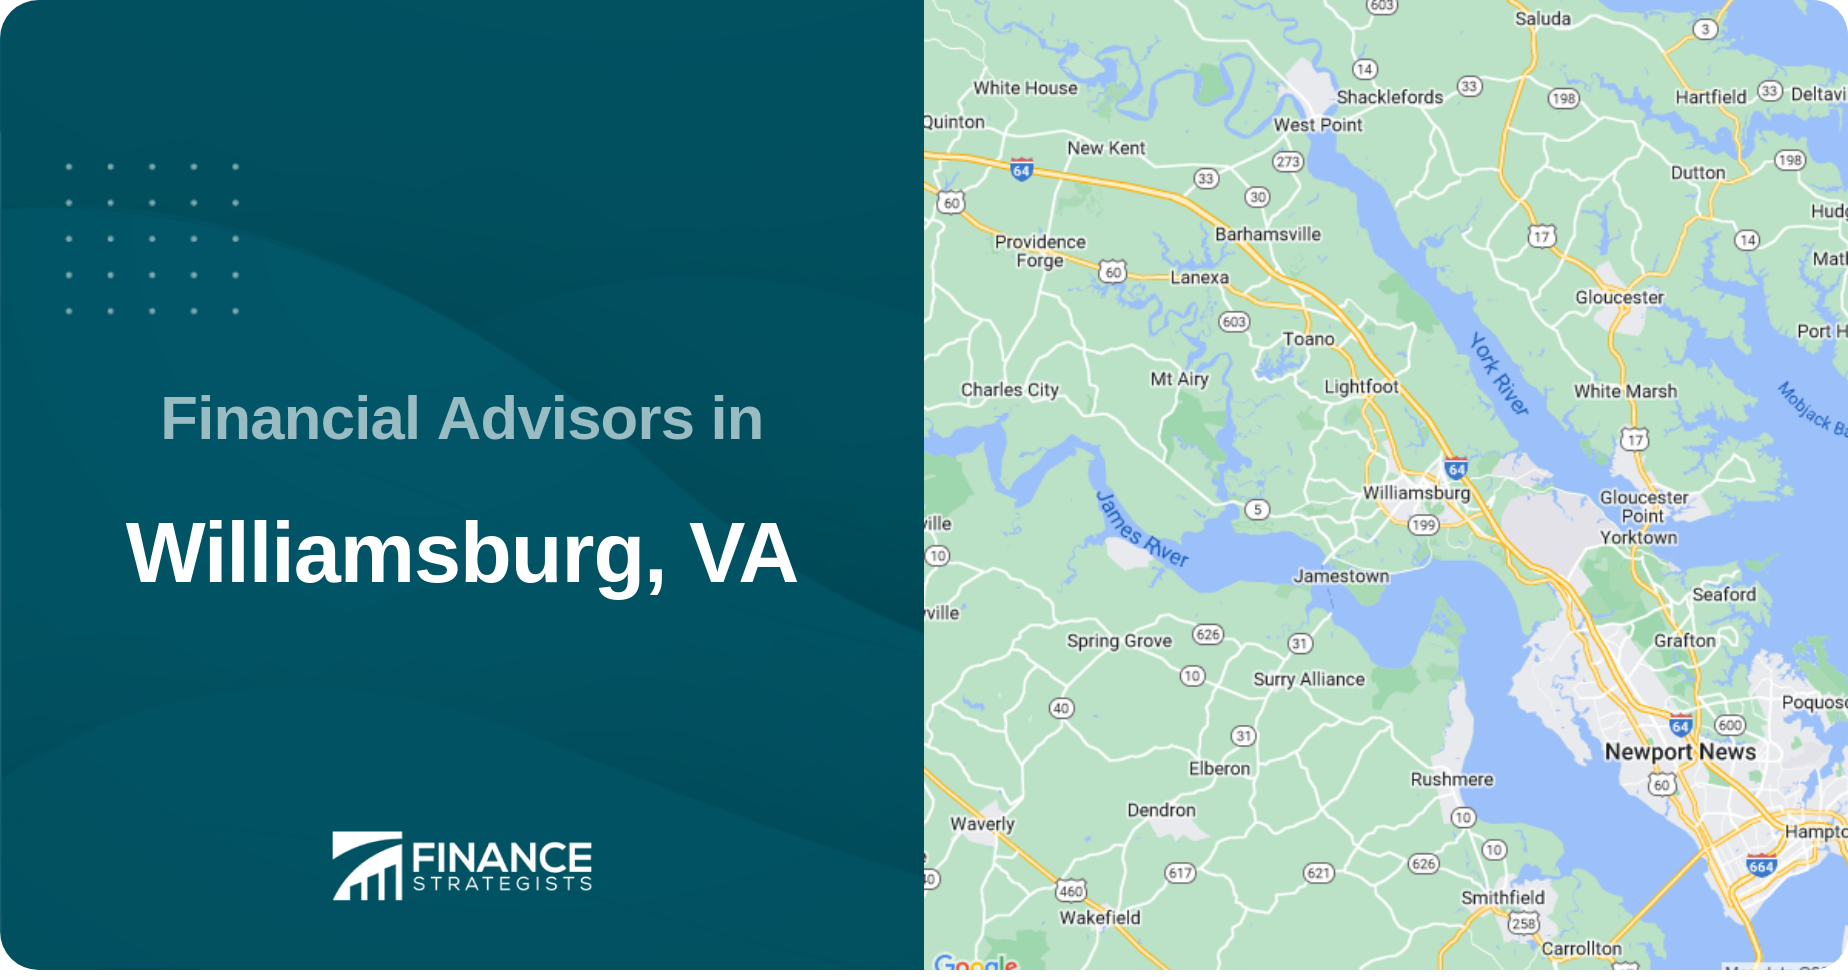 Financial Advisors in Williamsburg, VA